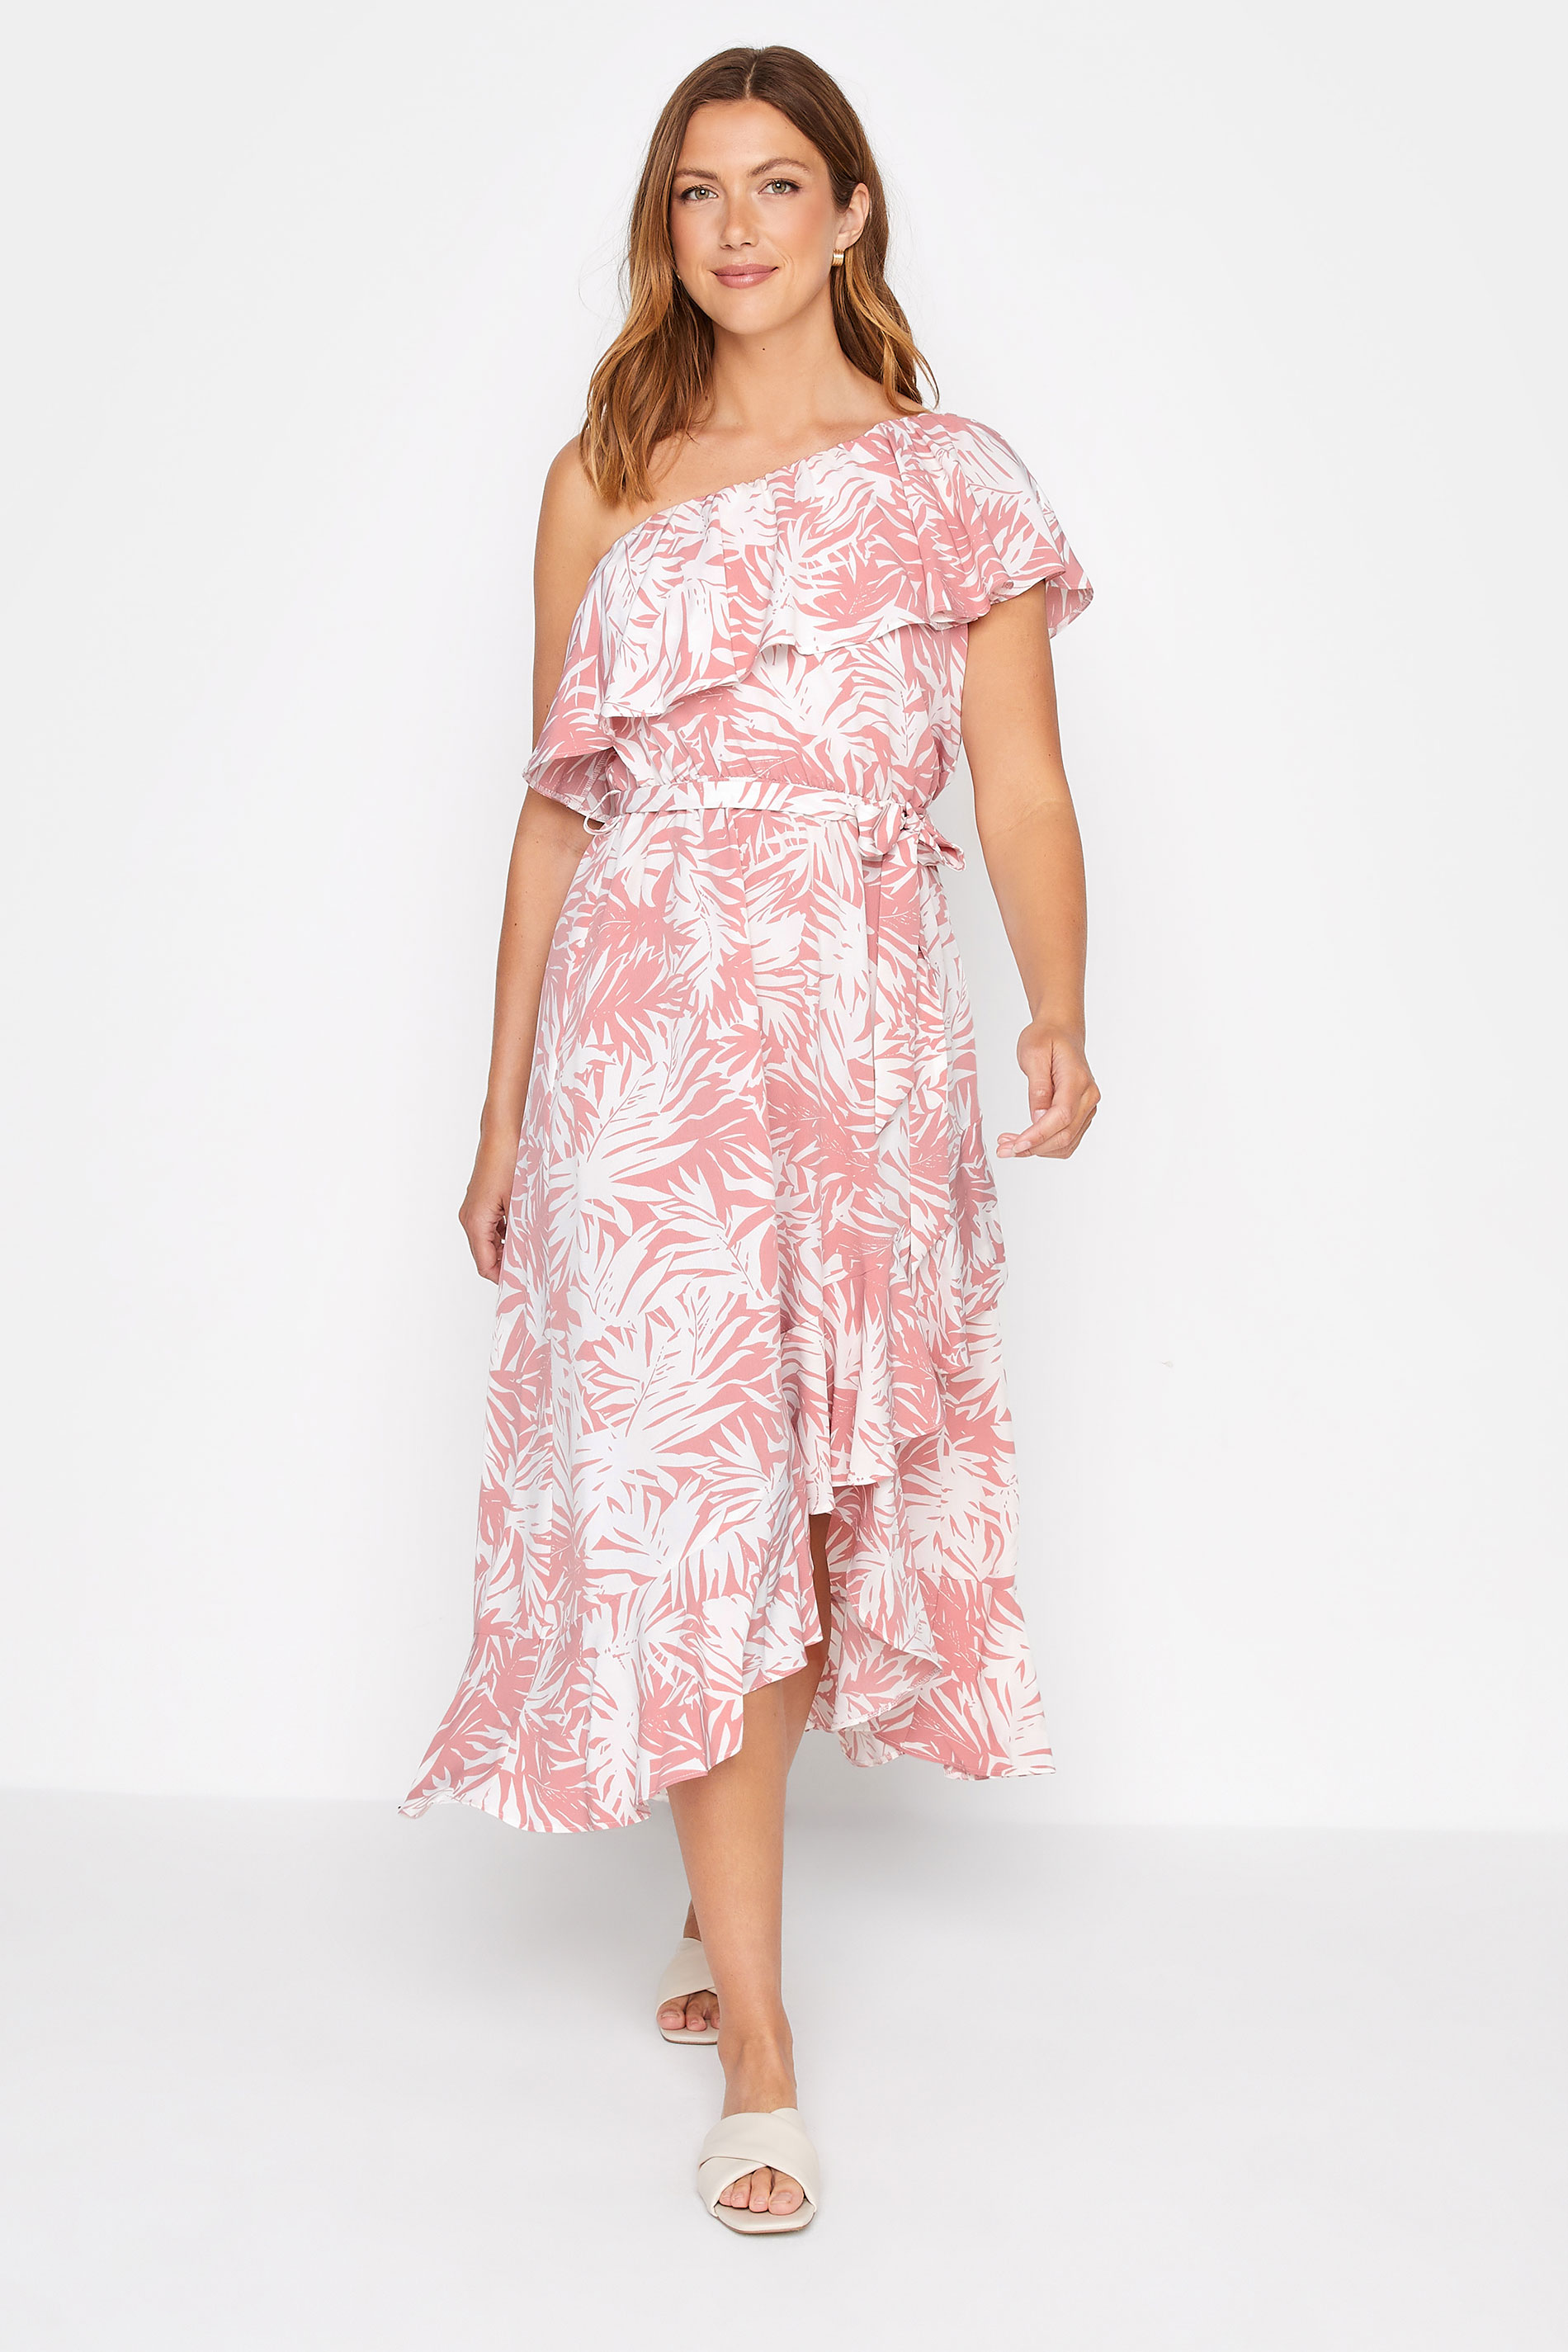 LTS Tall Women's Pink Leaf Print One Shoulder Frill Dress | Long Tall Sally  1